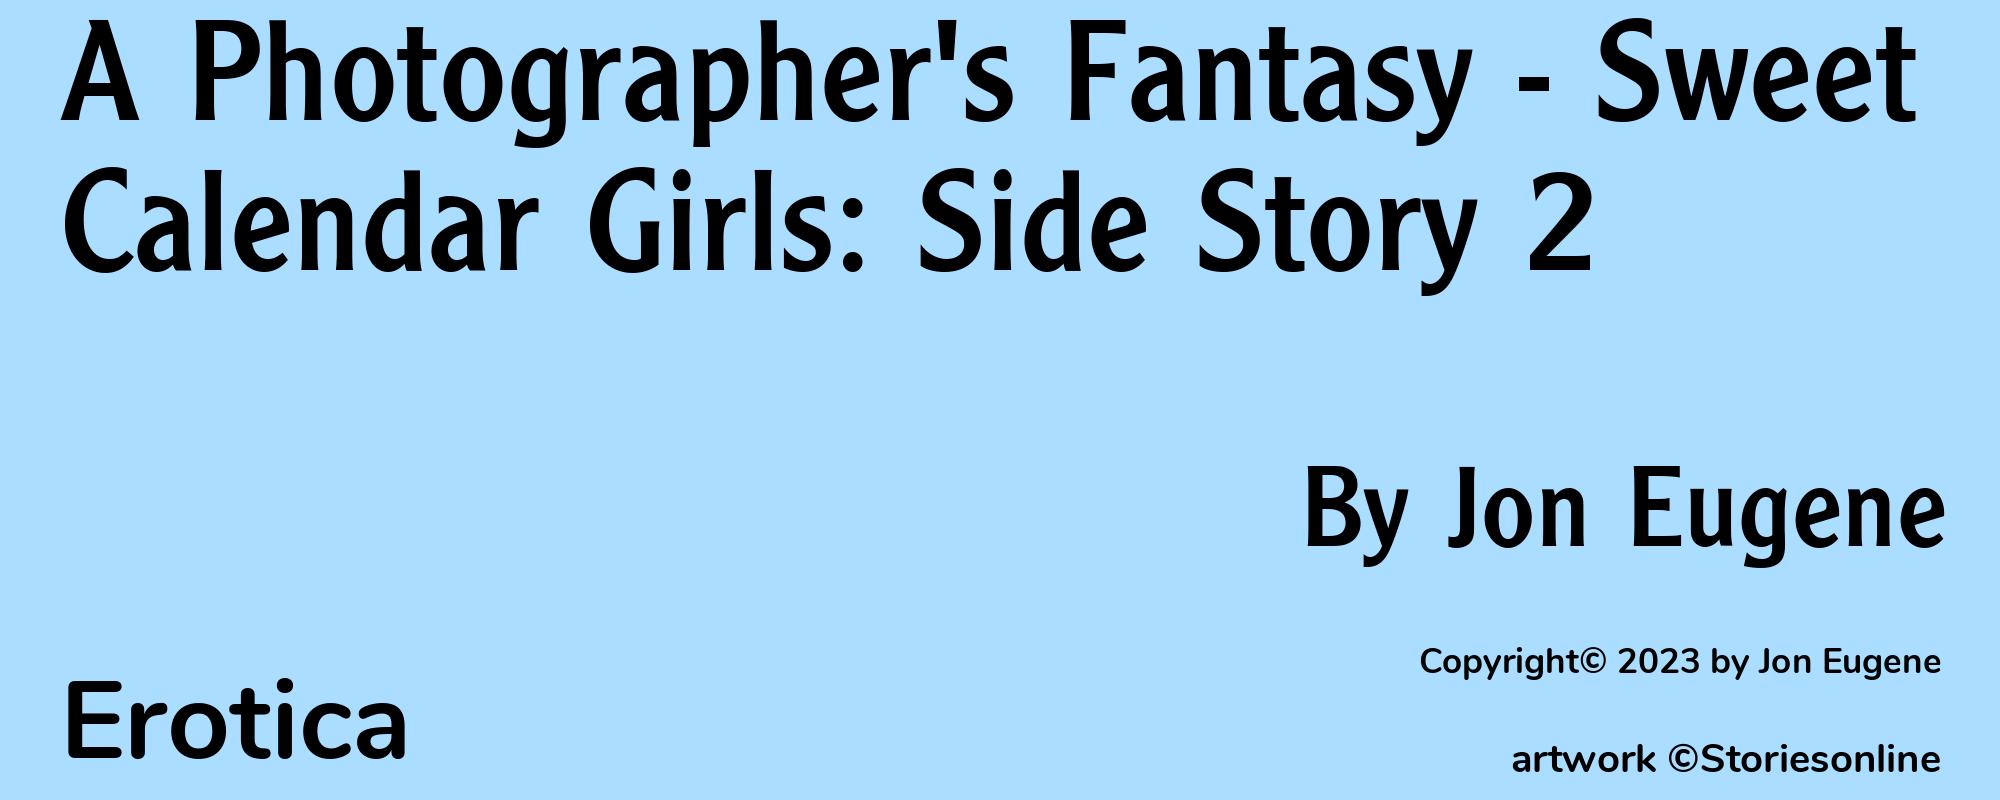 A Photographer's Fantasy - Sweet Calendar Girls: Side Story 2 - Cover